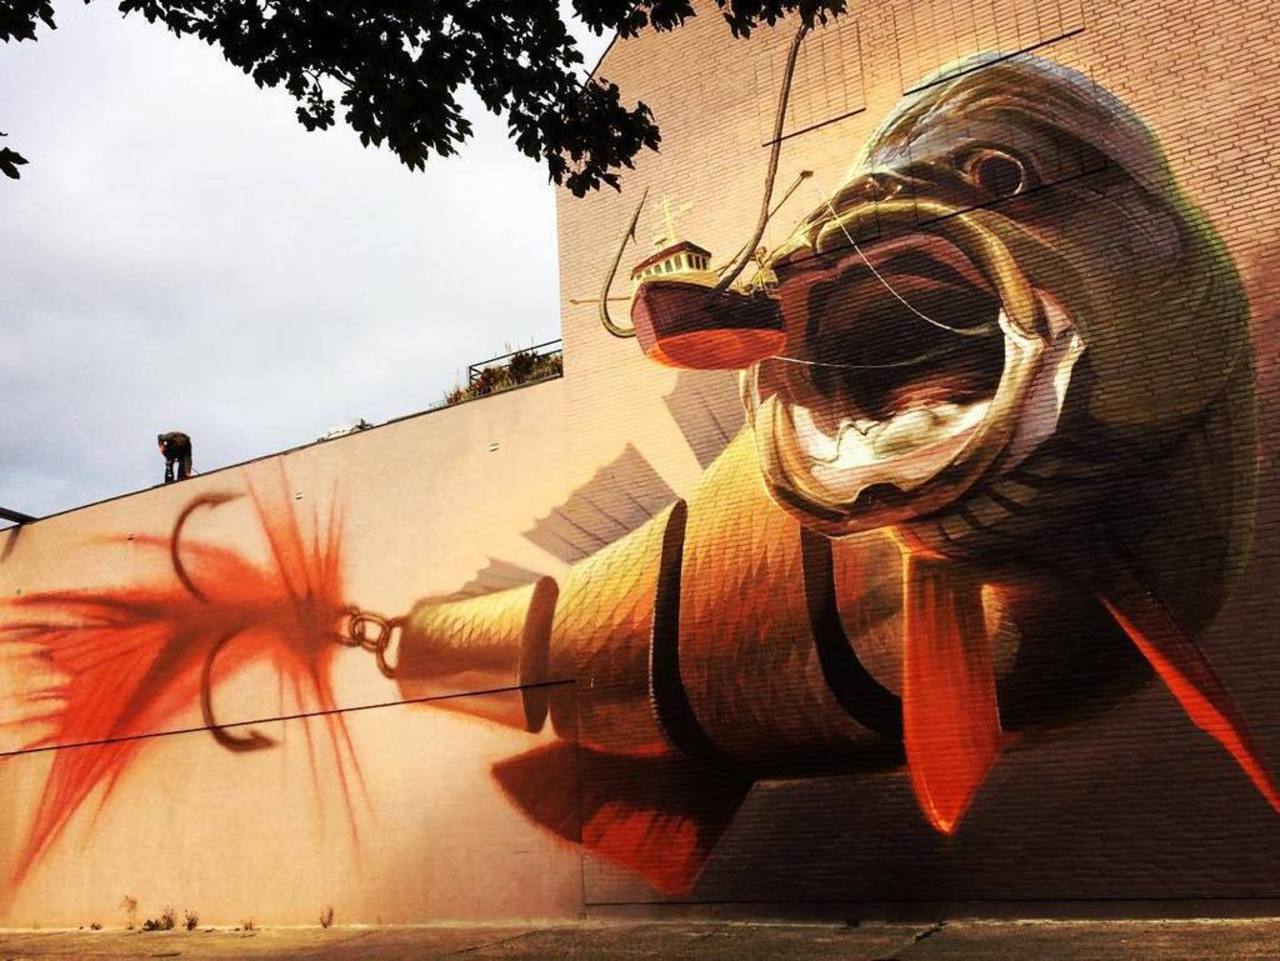 via #moving.alone "http://ift.tt/1QKKdgS" #graffiti #streetart http://t.co/5dNJlAZnwe